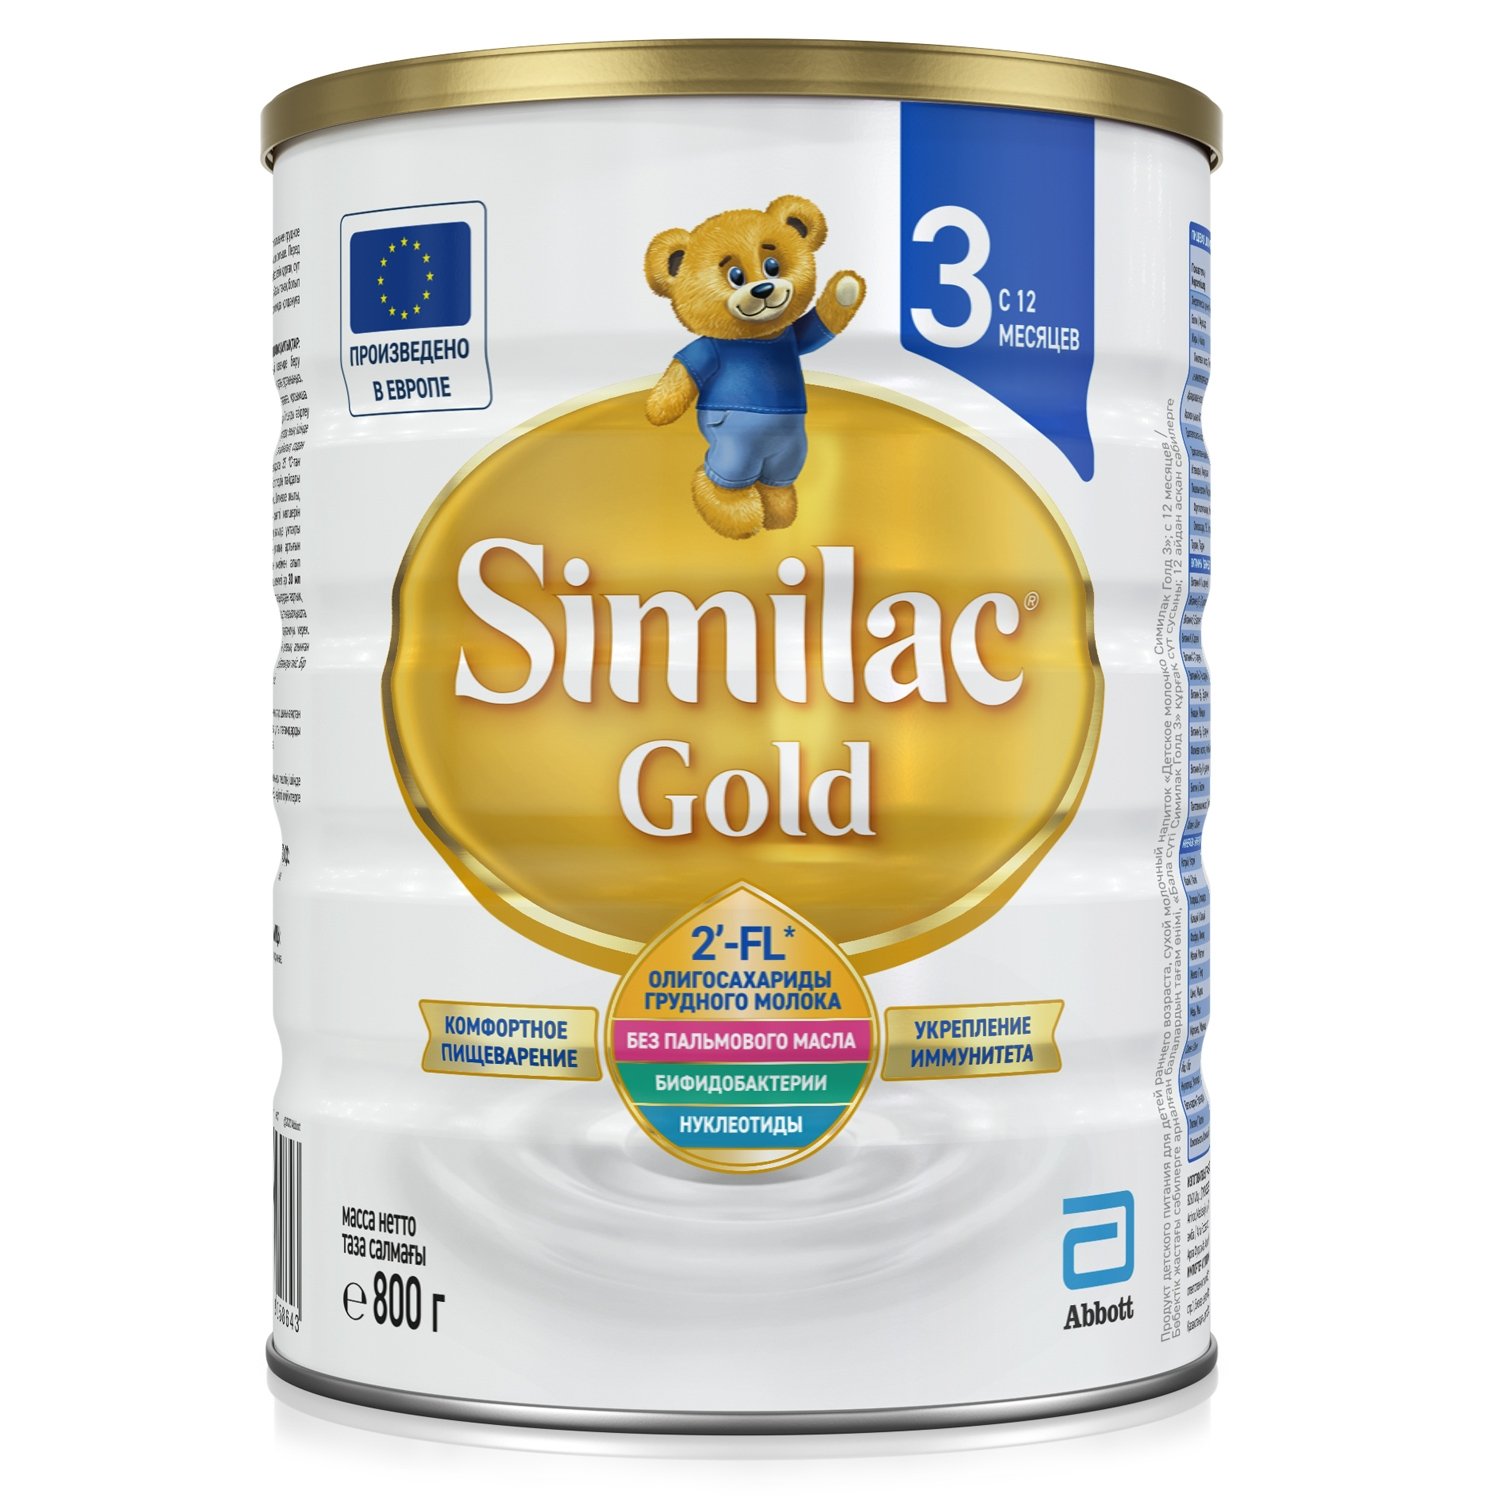 Similac GOLD 3 смесь, 800гр, с 12 мес